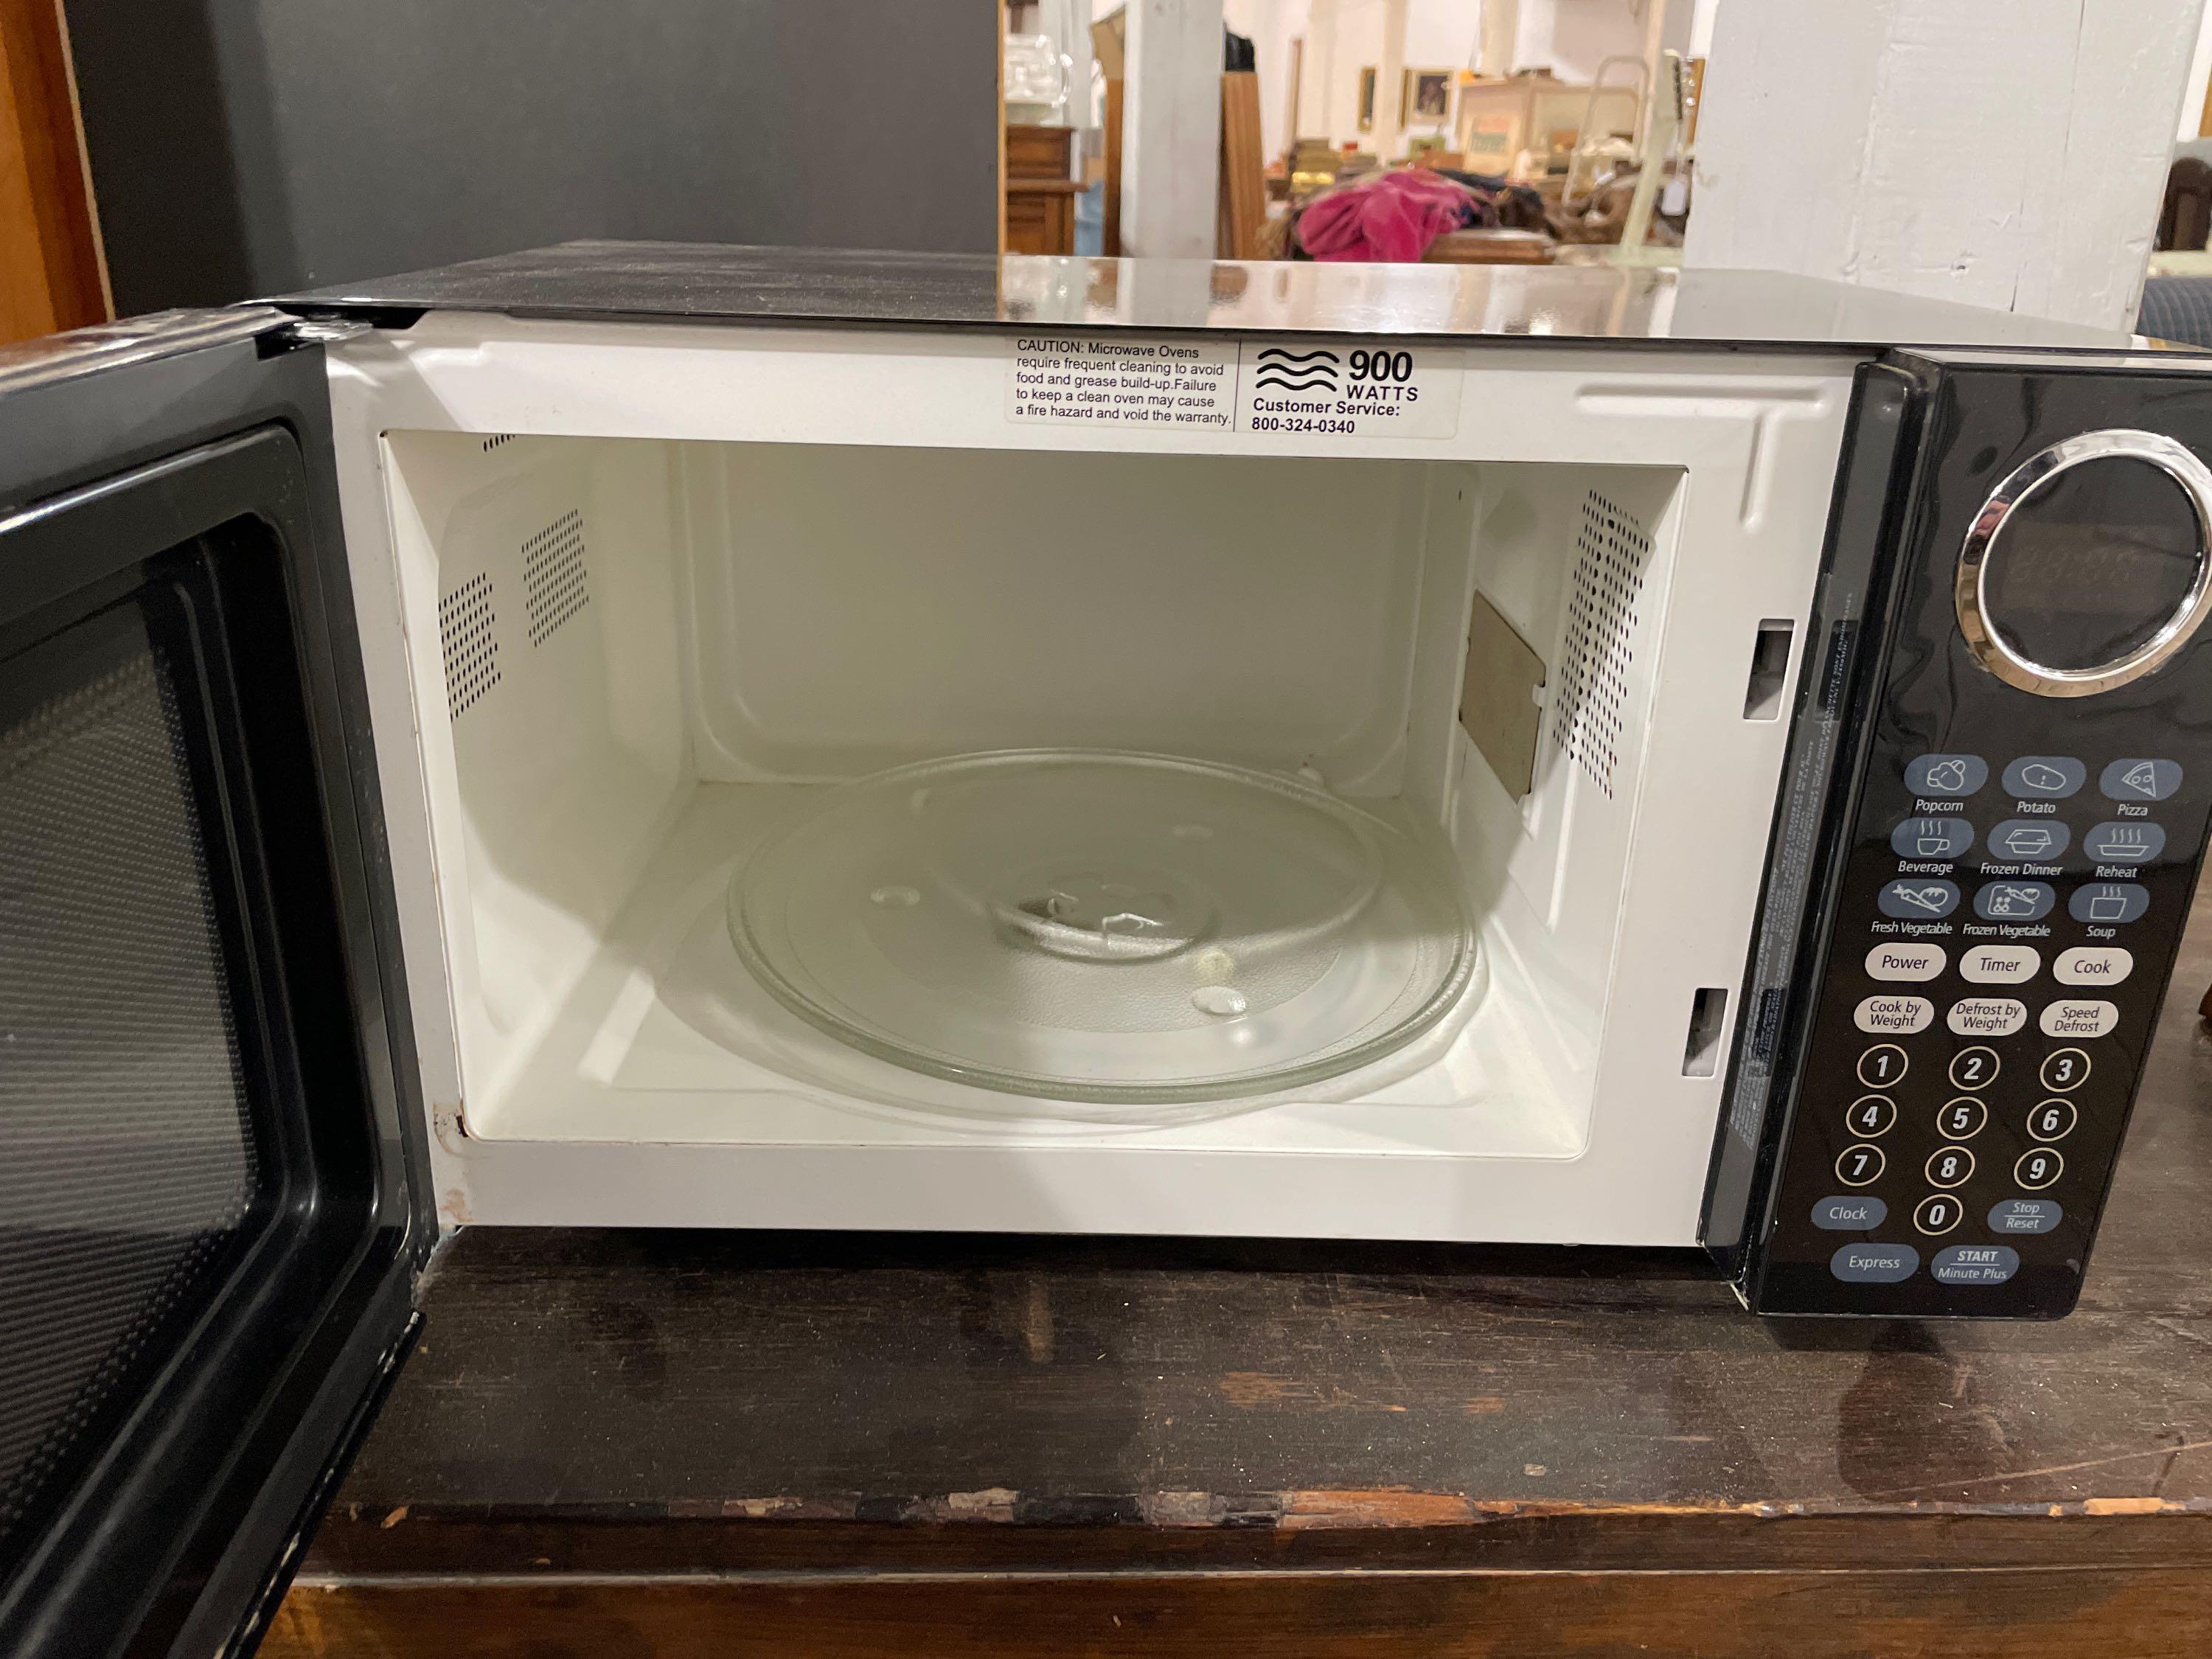 Sunbeam 0.9 cu ft 900W Microwave Oven - Black - SGB8901